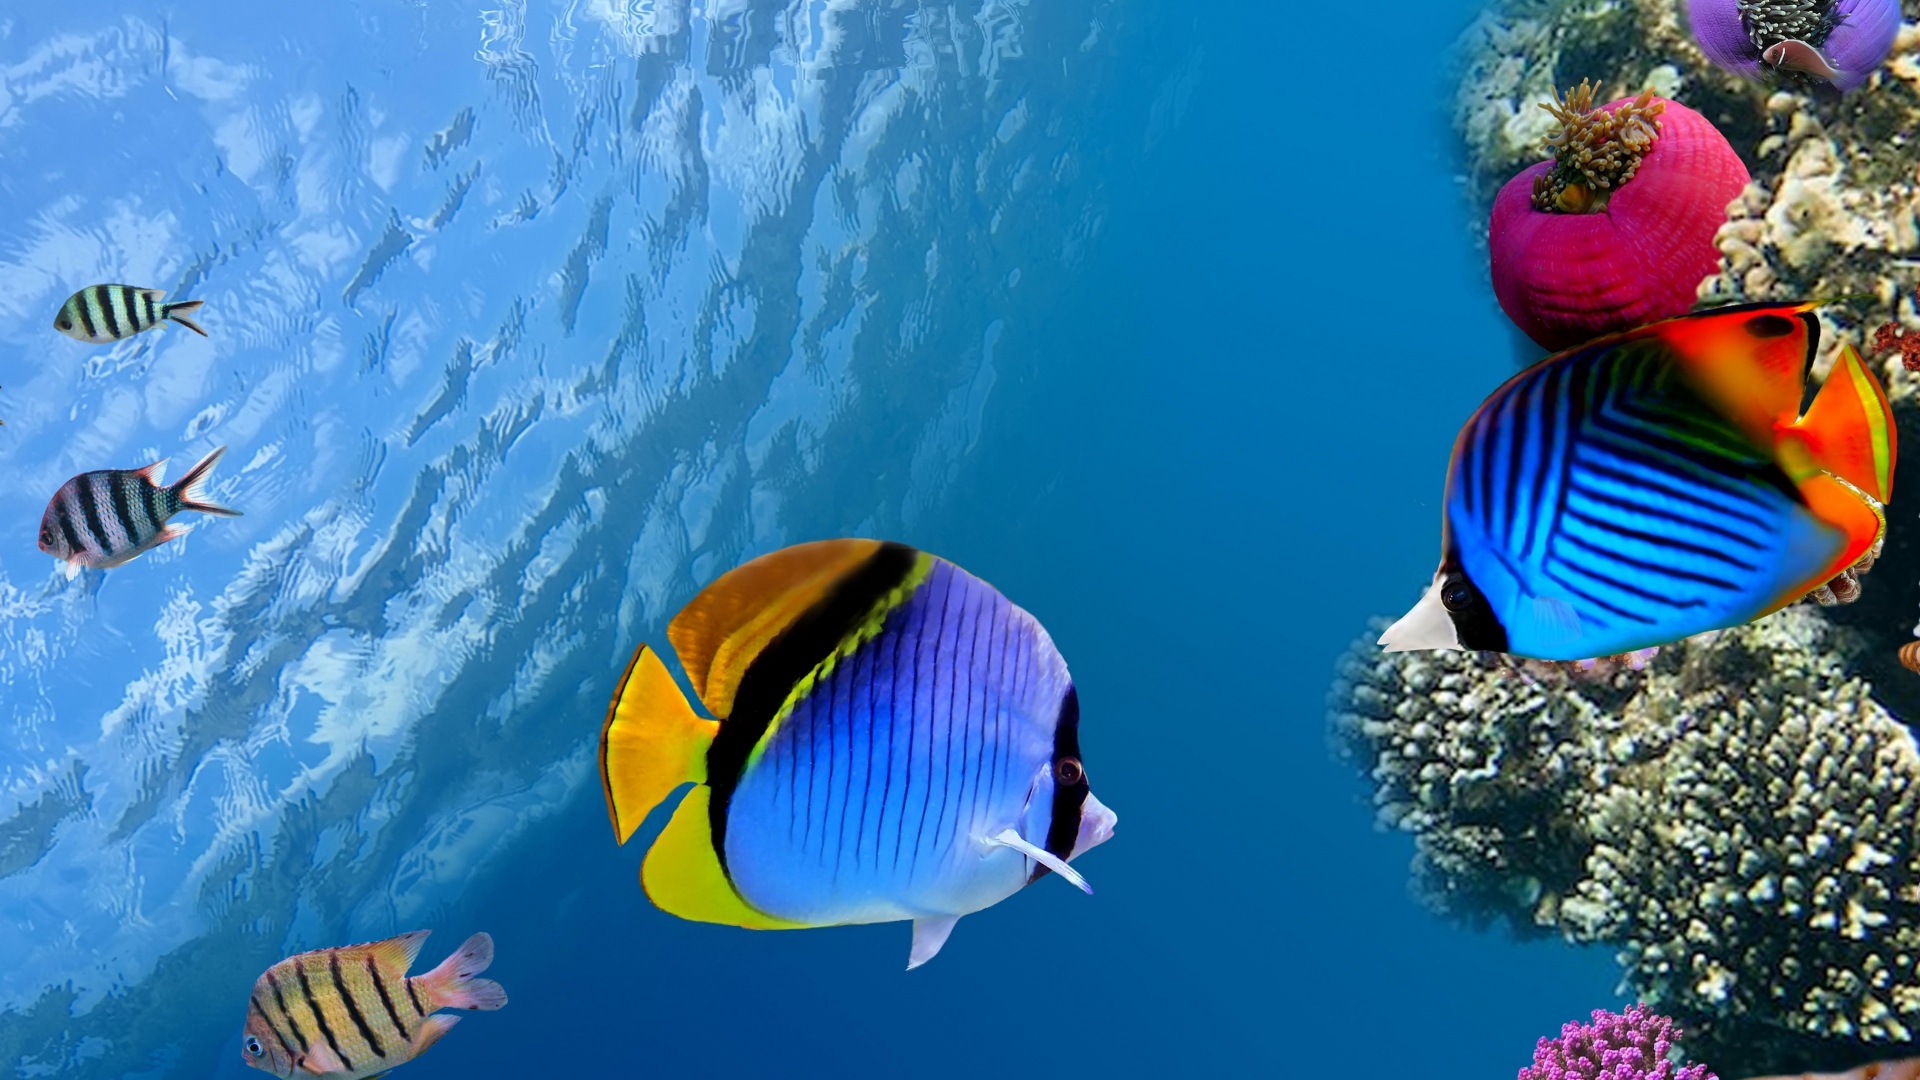 Under water coral fish sea ocean wallpaper. iOS wallpaper and Android wallpaper